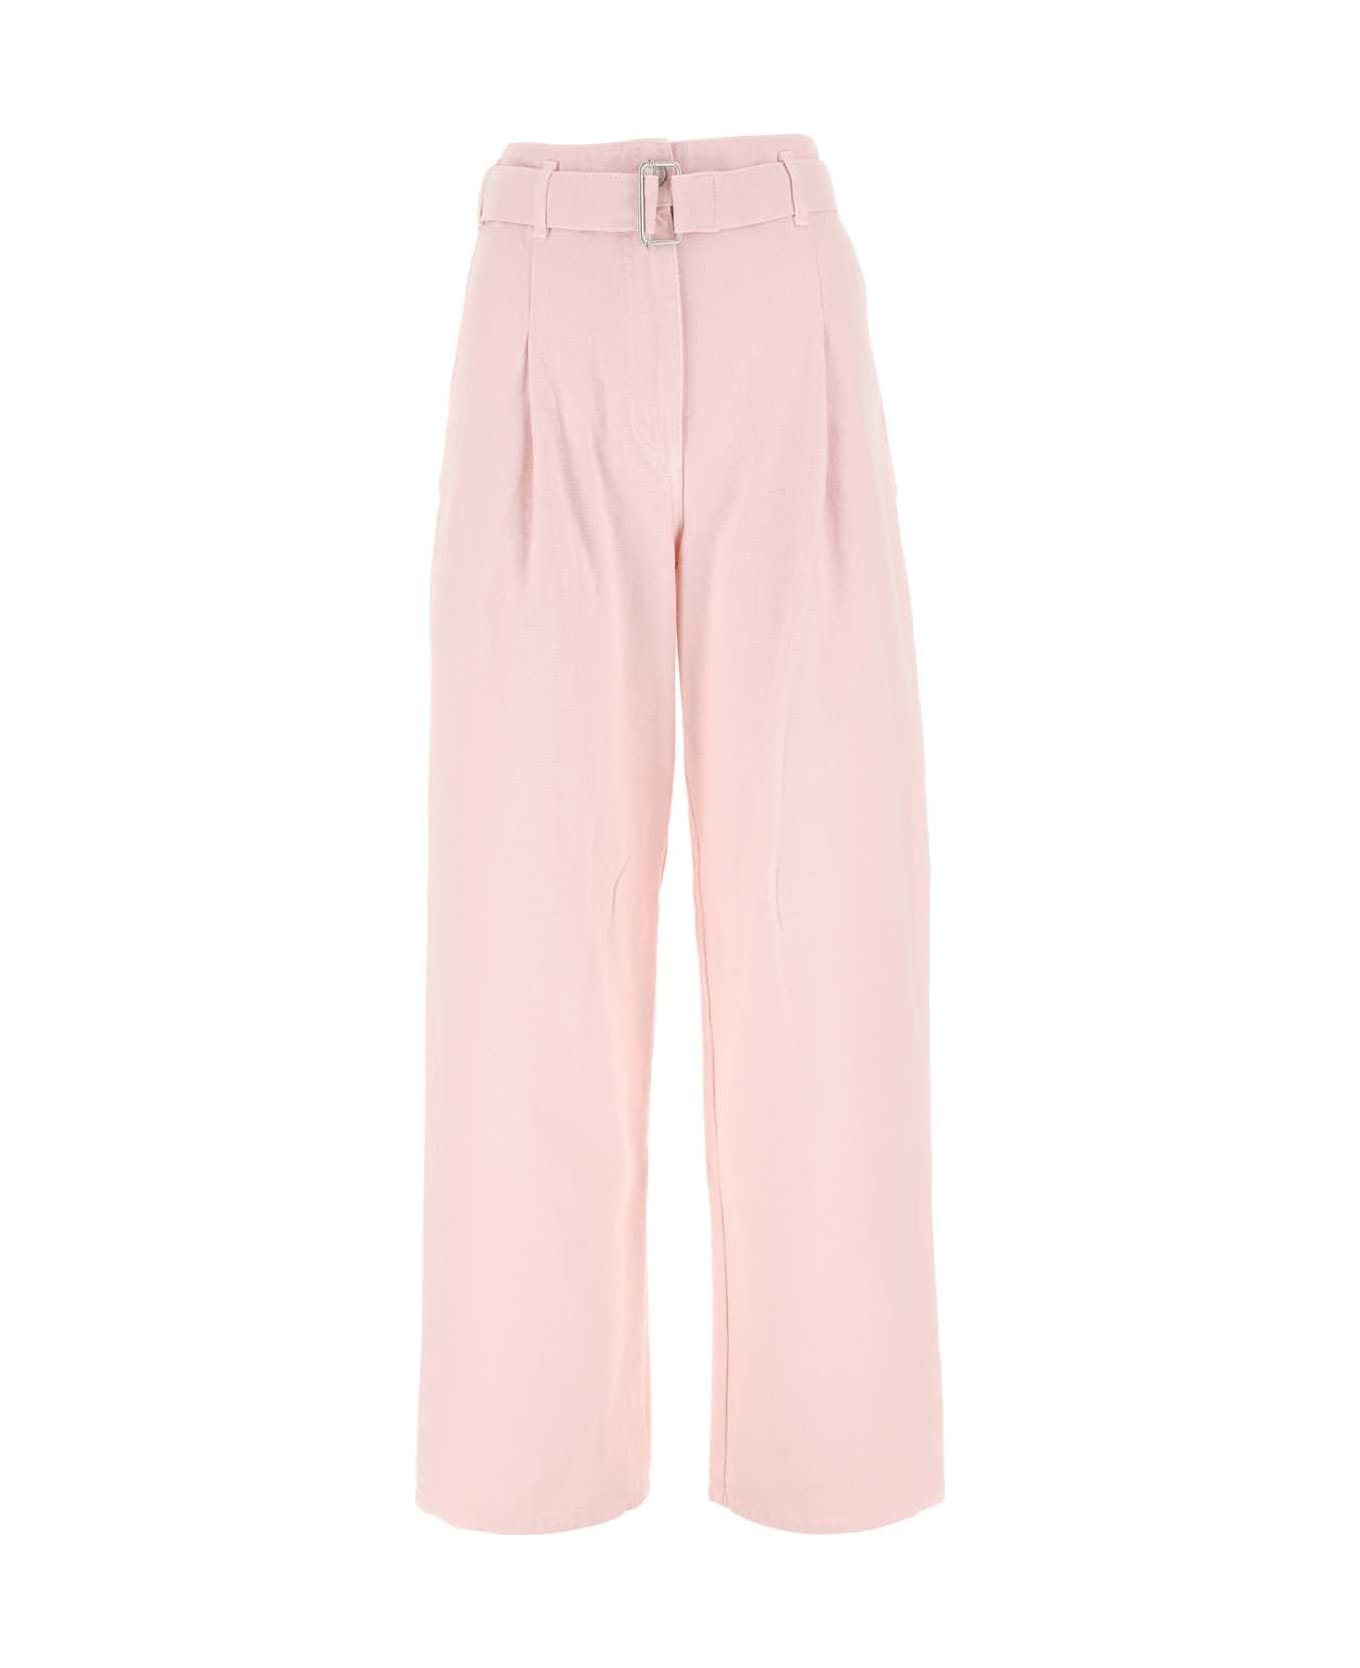 Philosophy di Lorenzo Serafini Light Pink Cotton Pant - Pink ボトムス